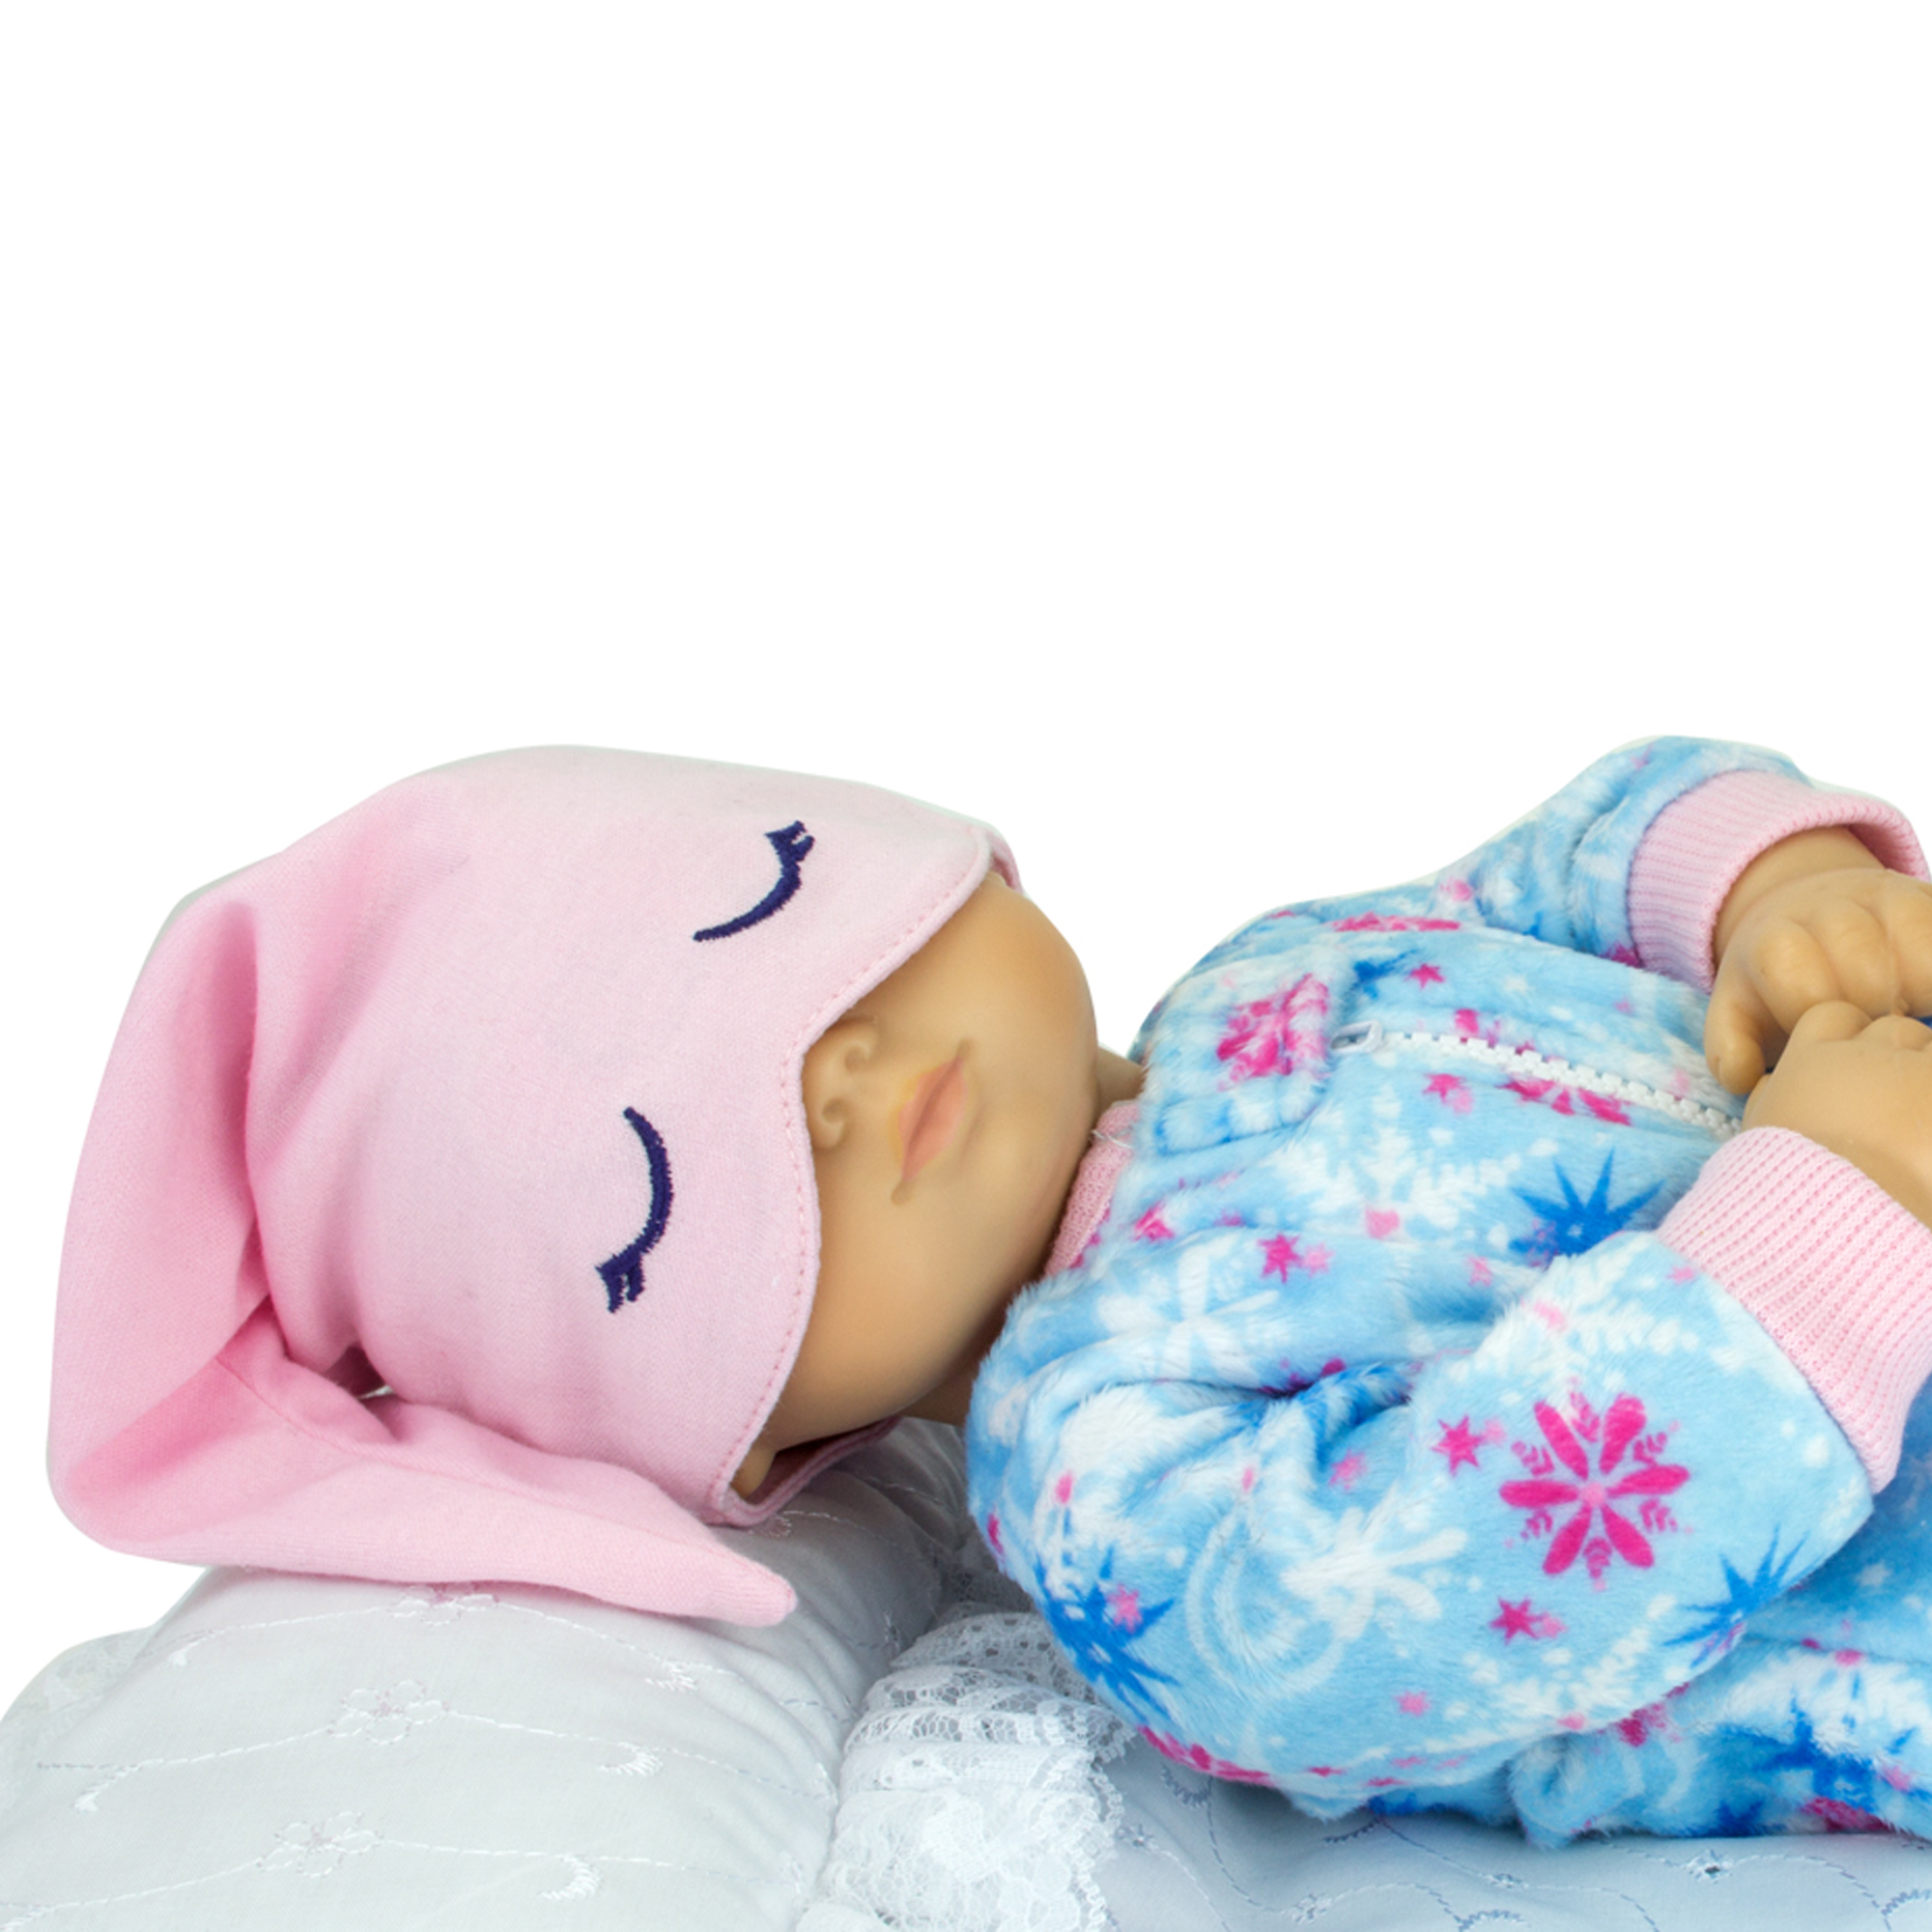 Sophia's Sophia’s 2 Piece Winter-Print Fleece Sleeper Outfit with Hat Set for 15'' Dolls, Blue/Pink